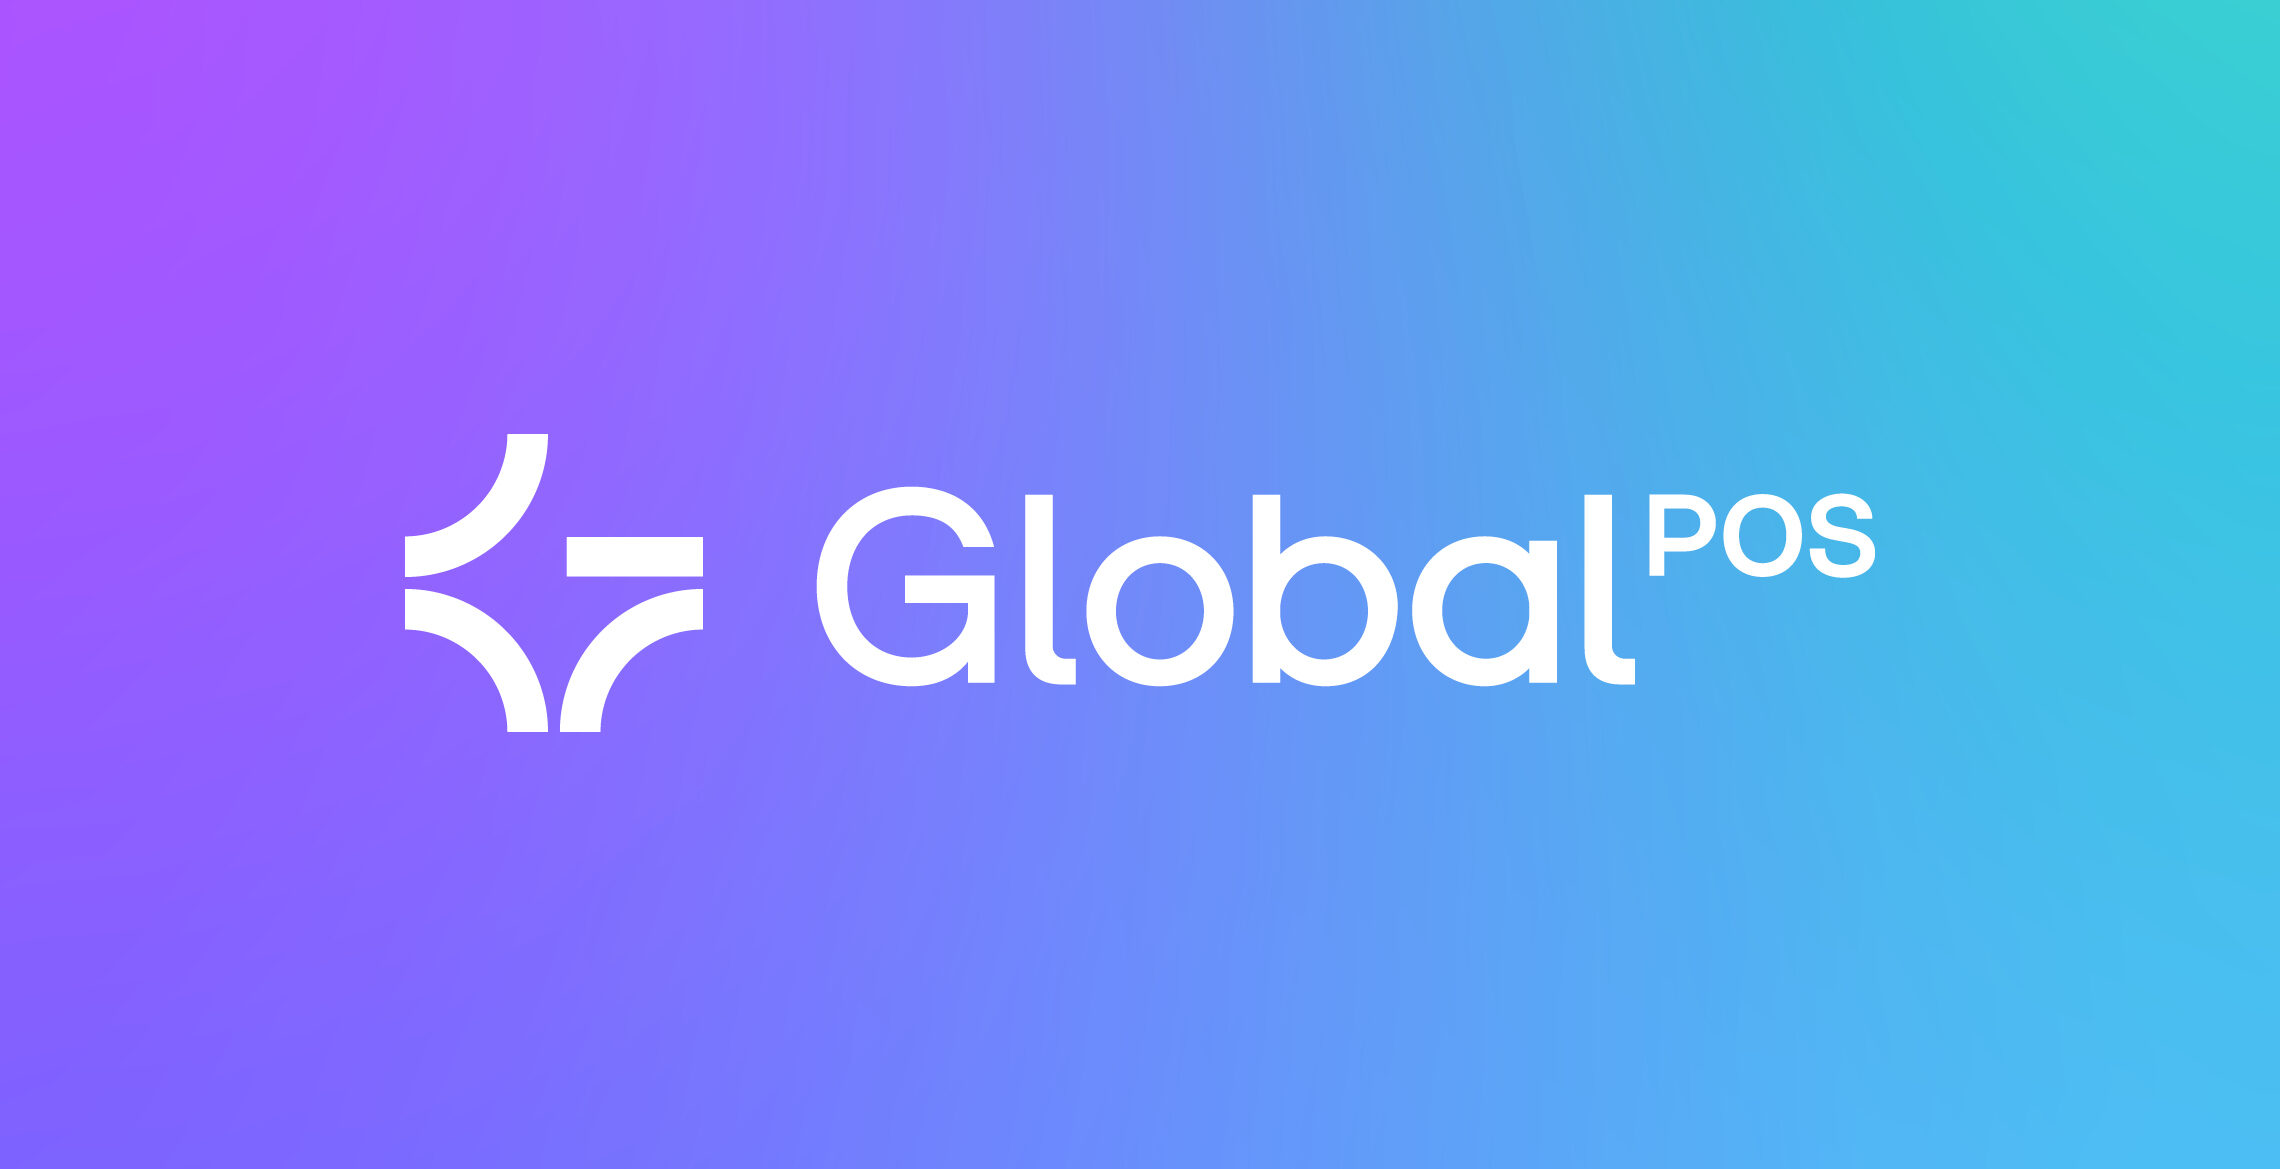 GLOBAL_POS_New_Brand_identity_Gabarit_2